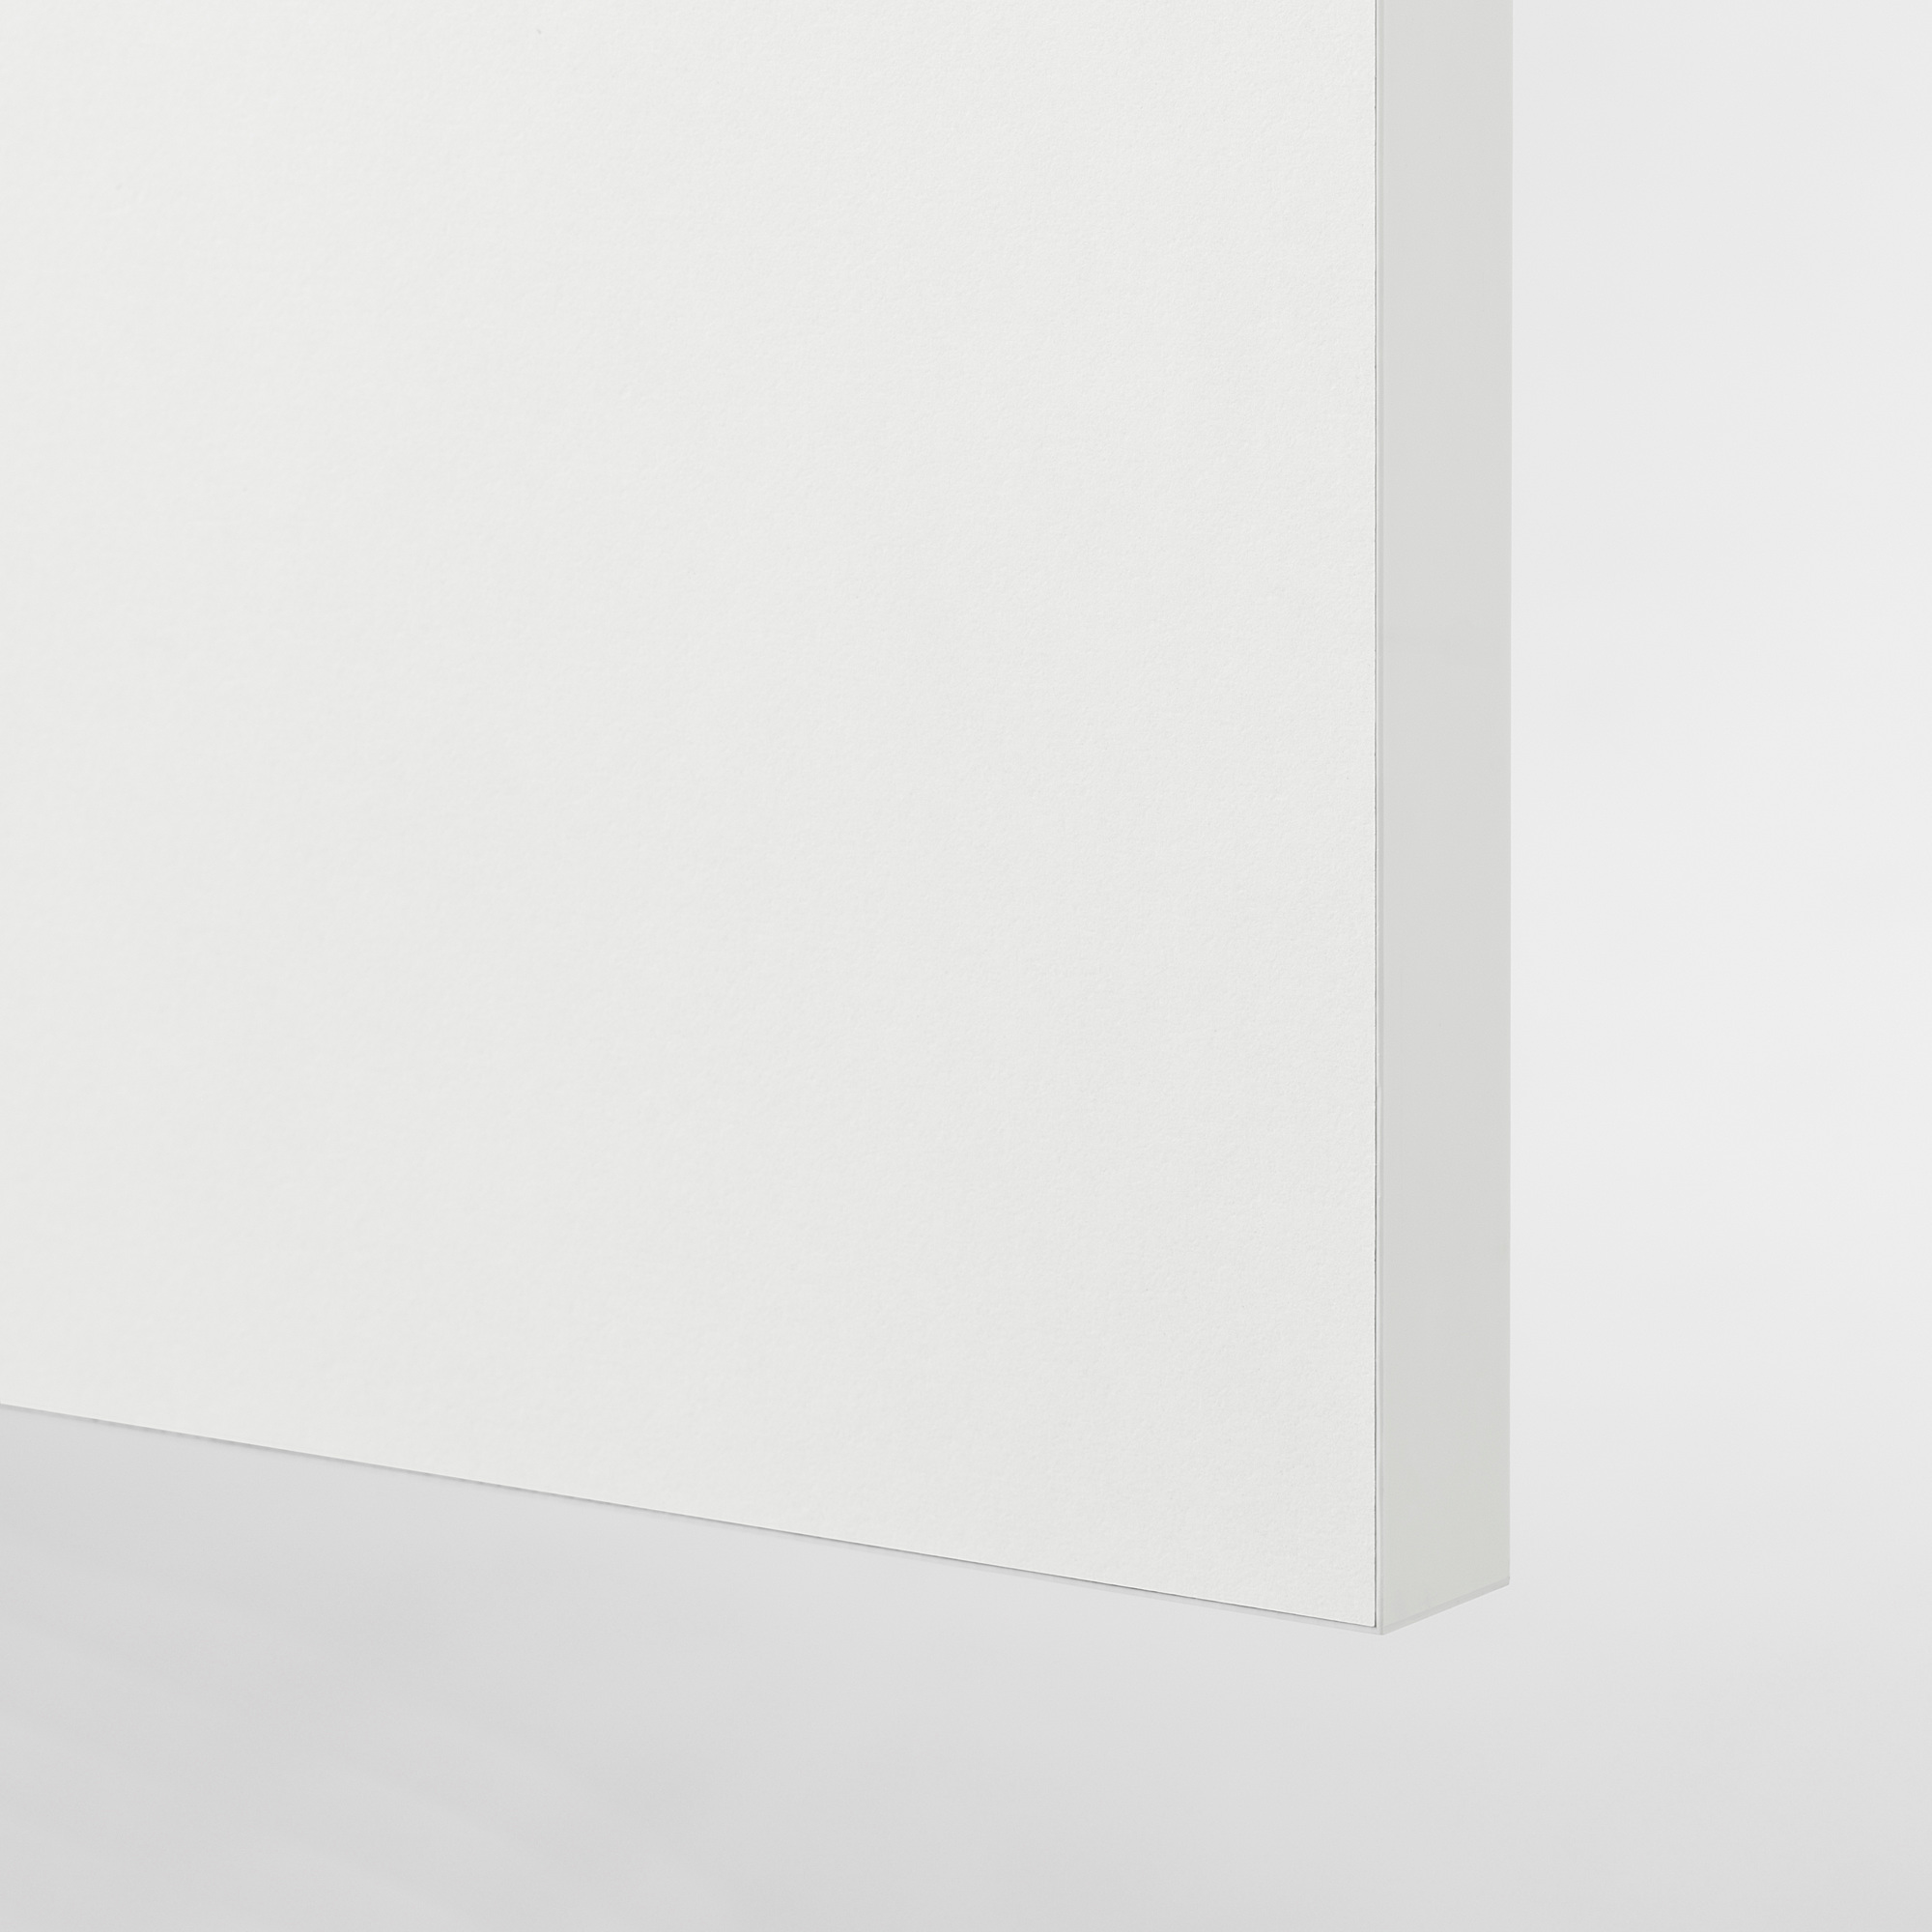 KNOXHULT corner base cabinet